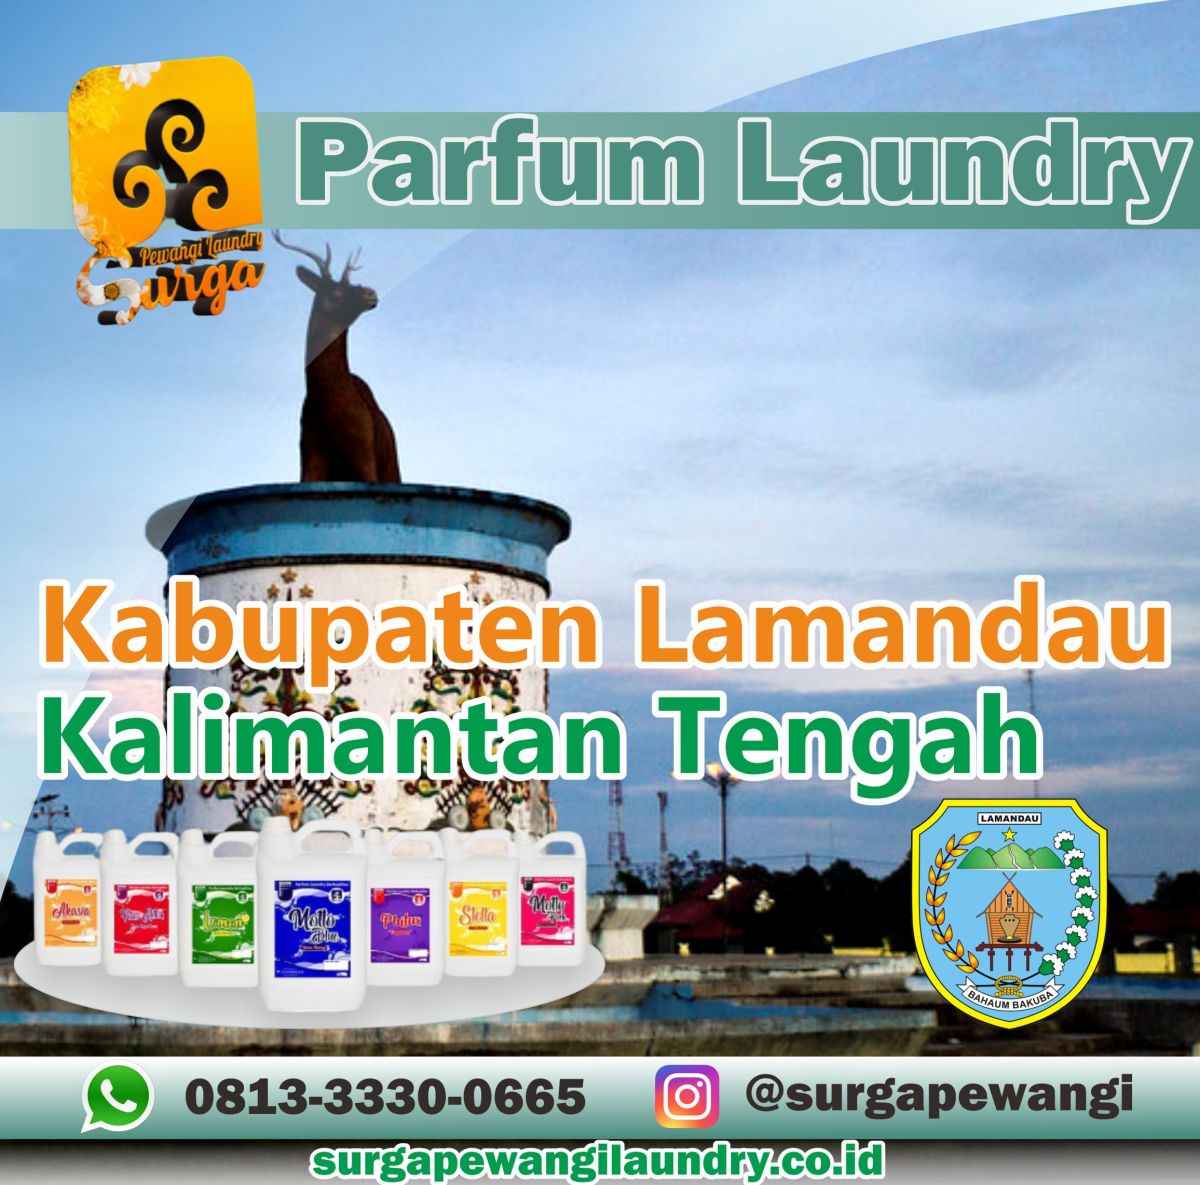 Parfum Laundry Kabupaten Lamandau, Kalimantan Tengah